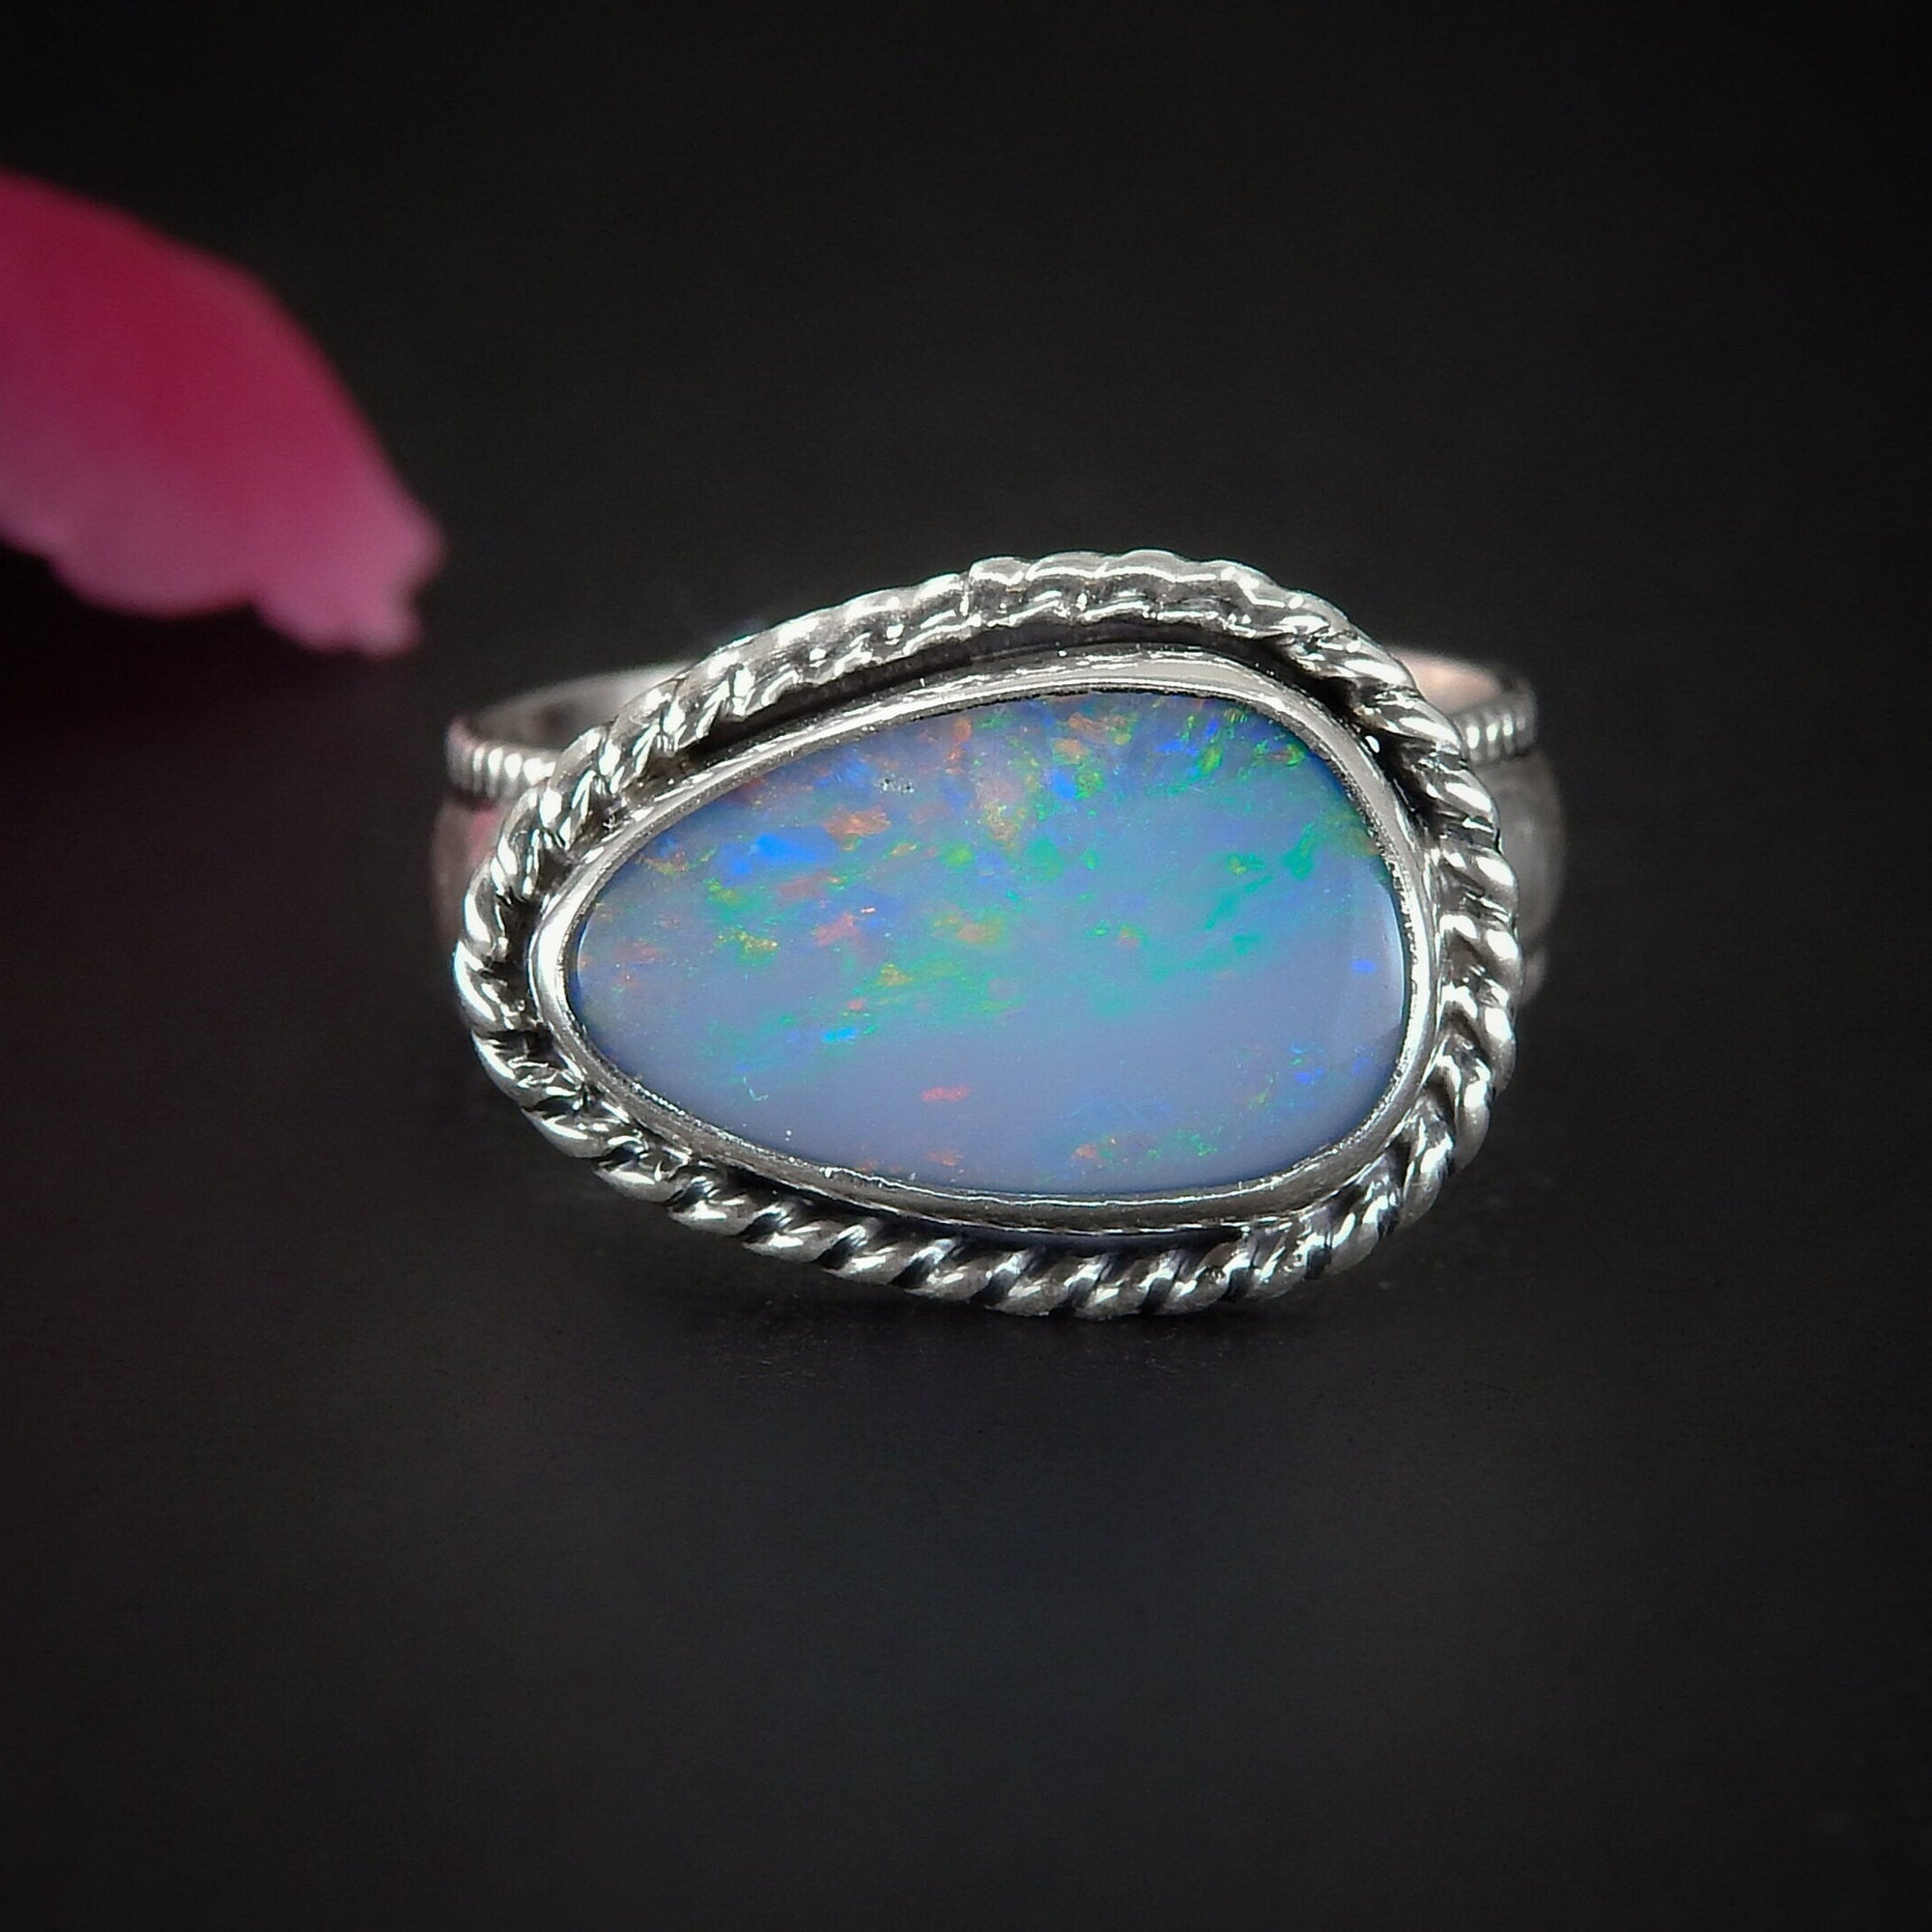 Australian Opal Ring - Size 7 1/2 - Sterling Silver - Lightning Ridge Opal Ring - Rainbow Opal Jewelry - Blue Opal OOAK - Thick Band